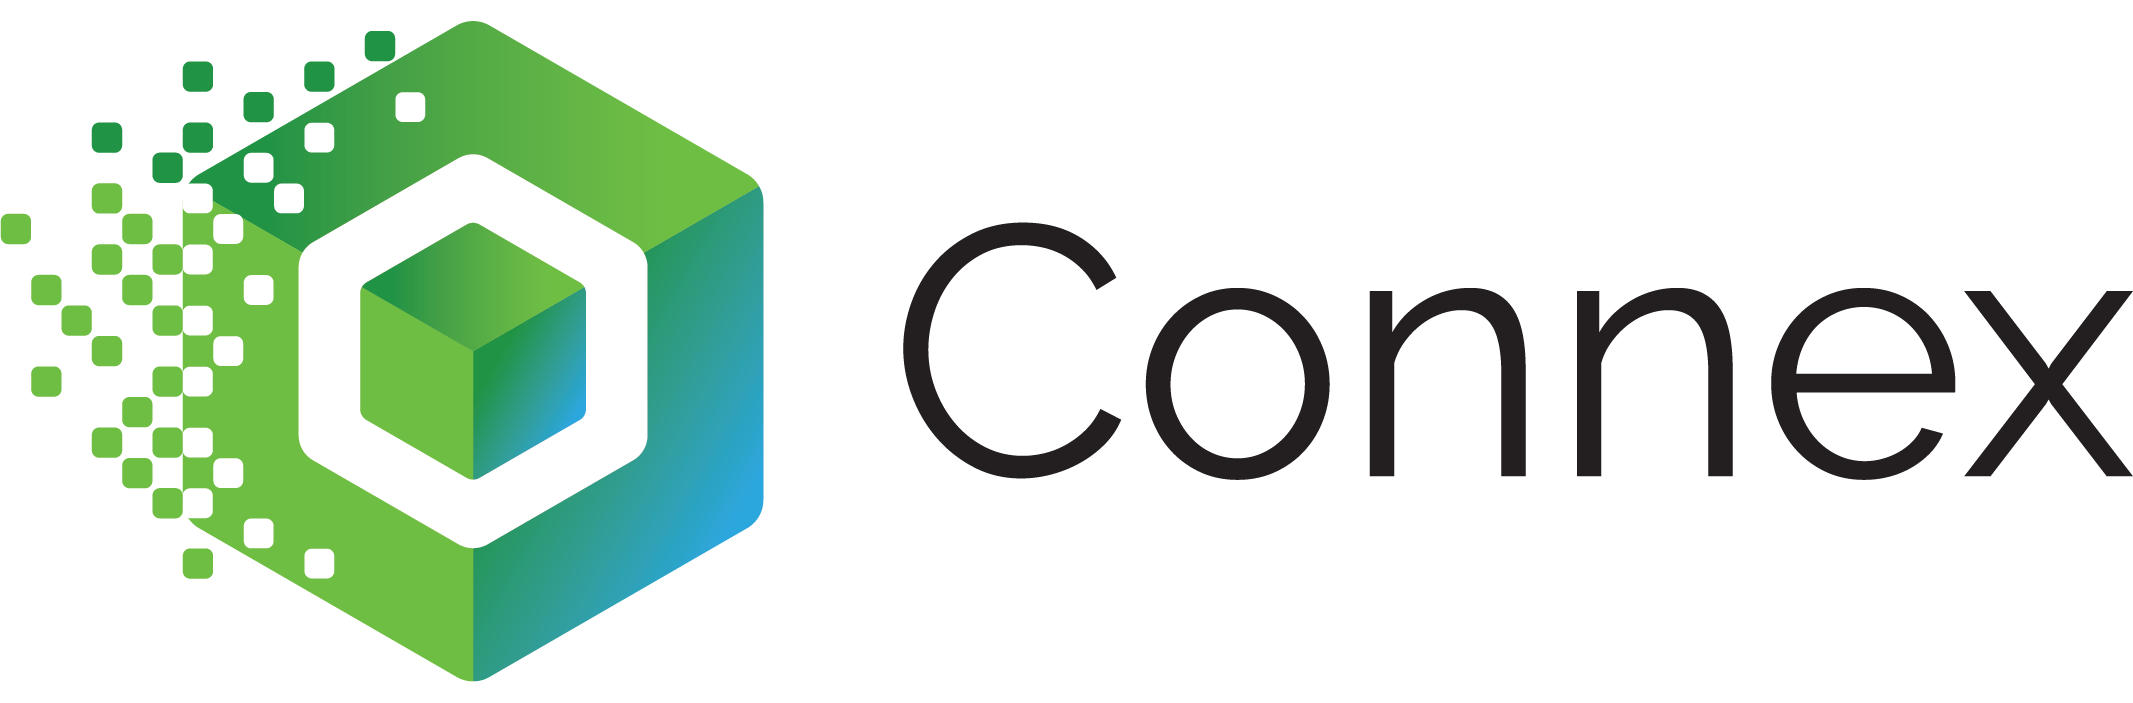 Connex_Main_Logo@3x-1